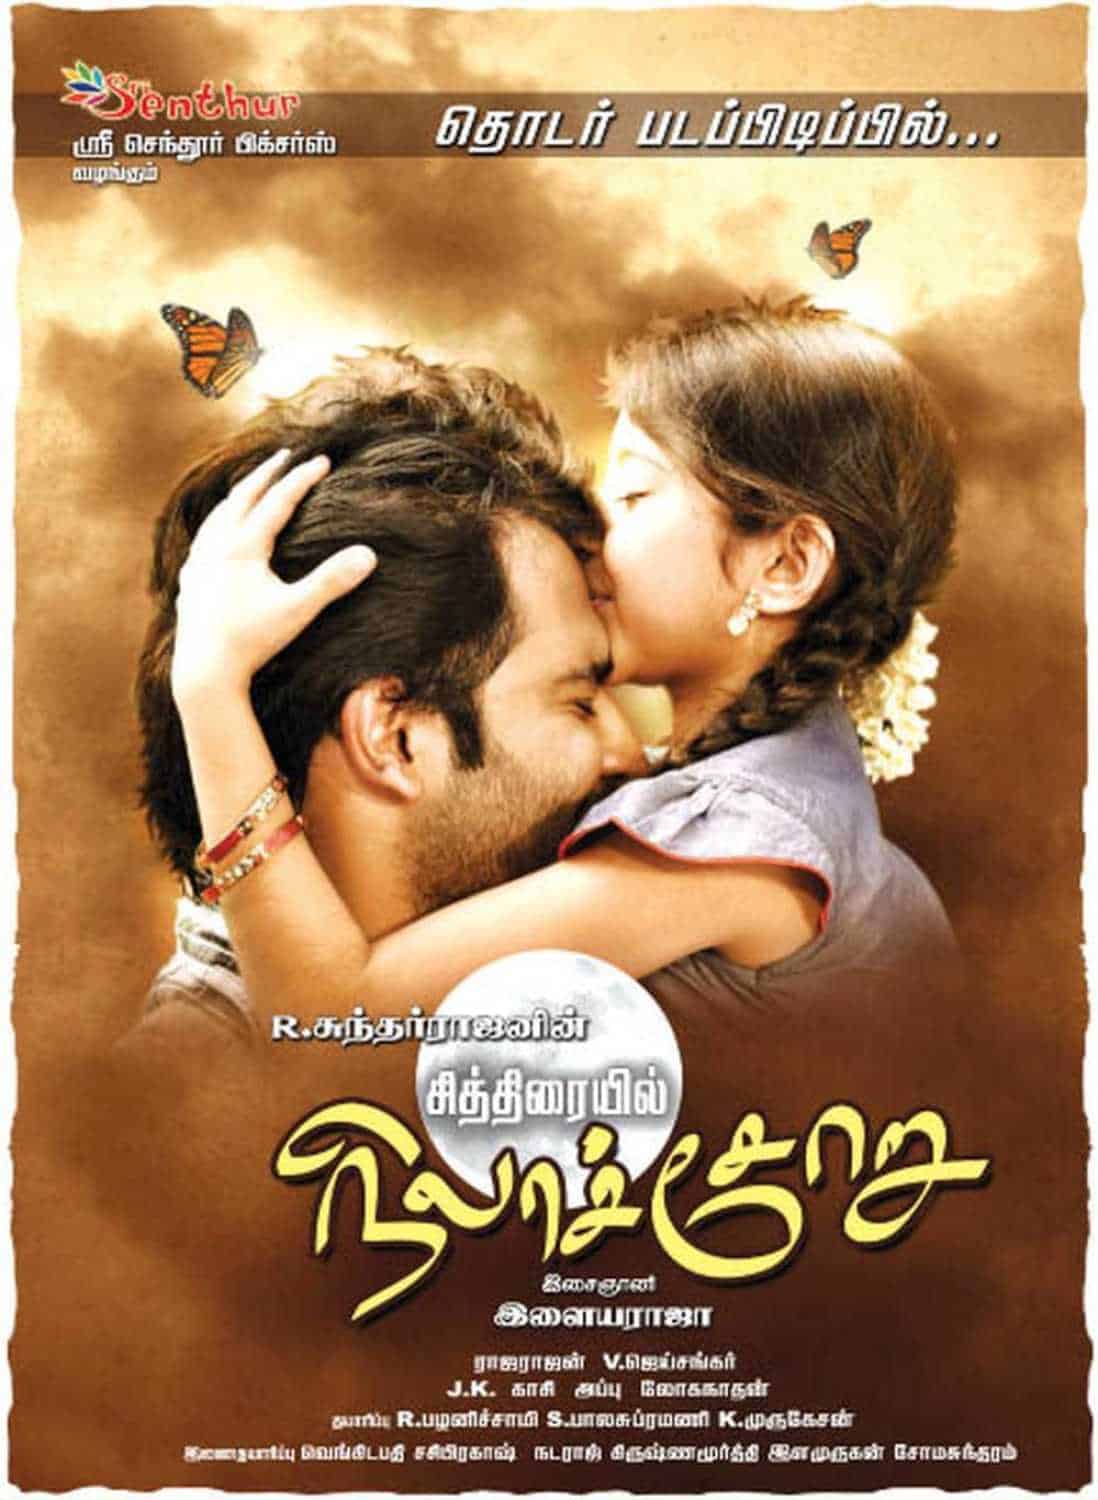 Chithirayil Nilachoru 2013 Tamil Drama Movie Online